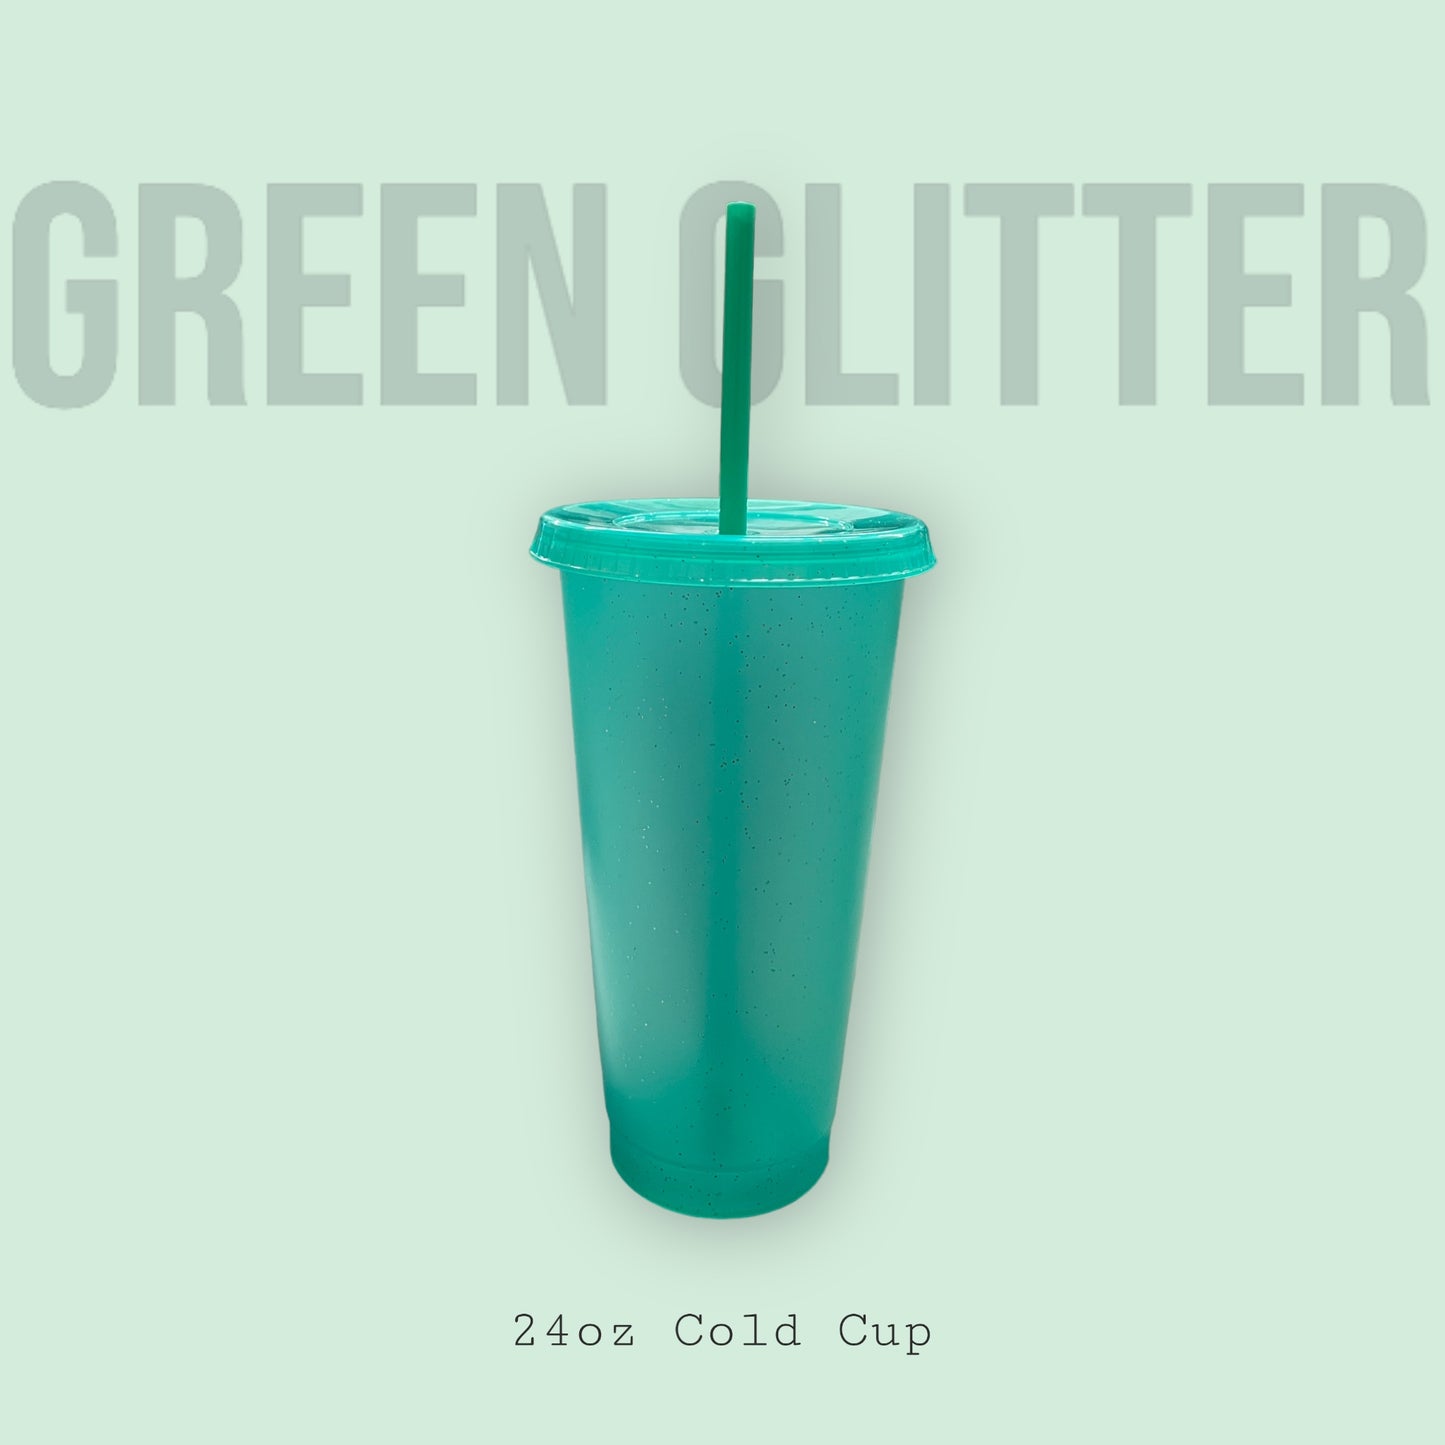 Green Glitter Cold Cups (24oz)